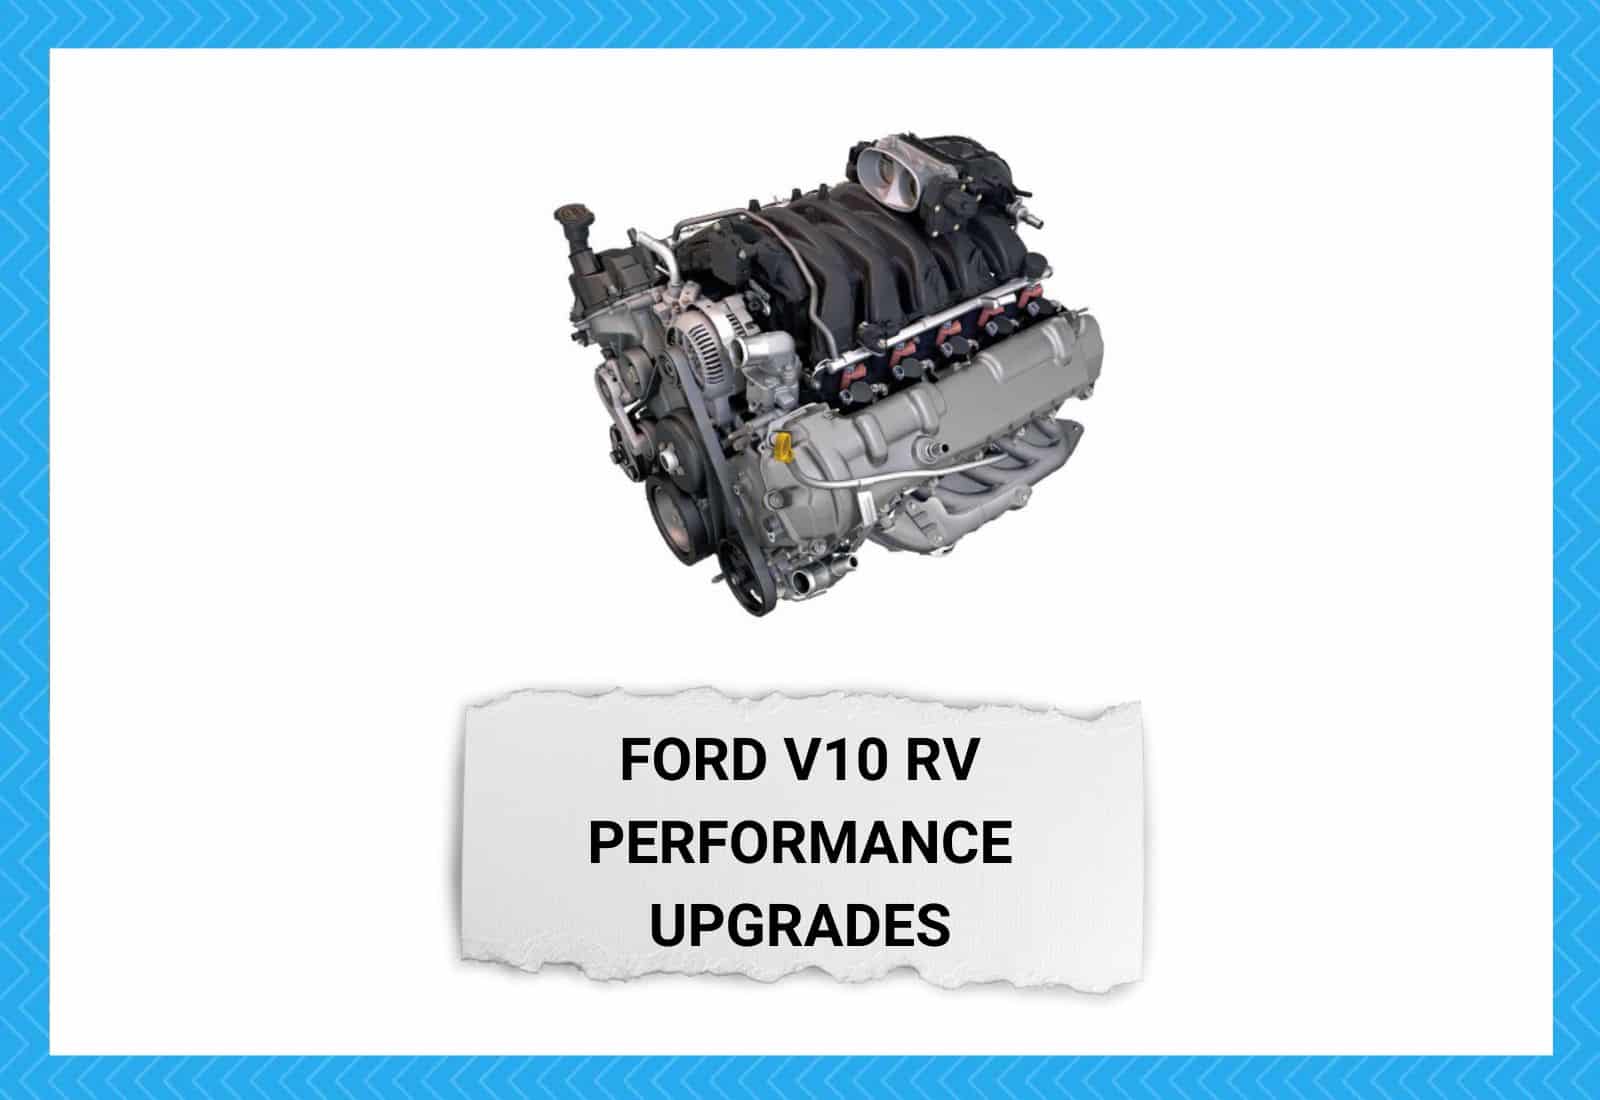 Ford V10 RV Performance Upgrades